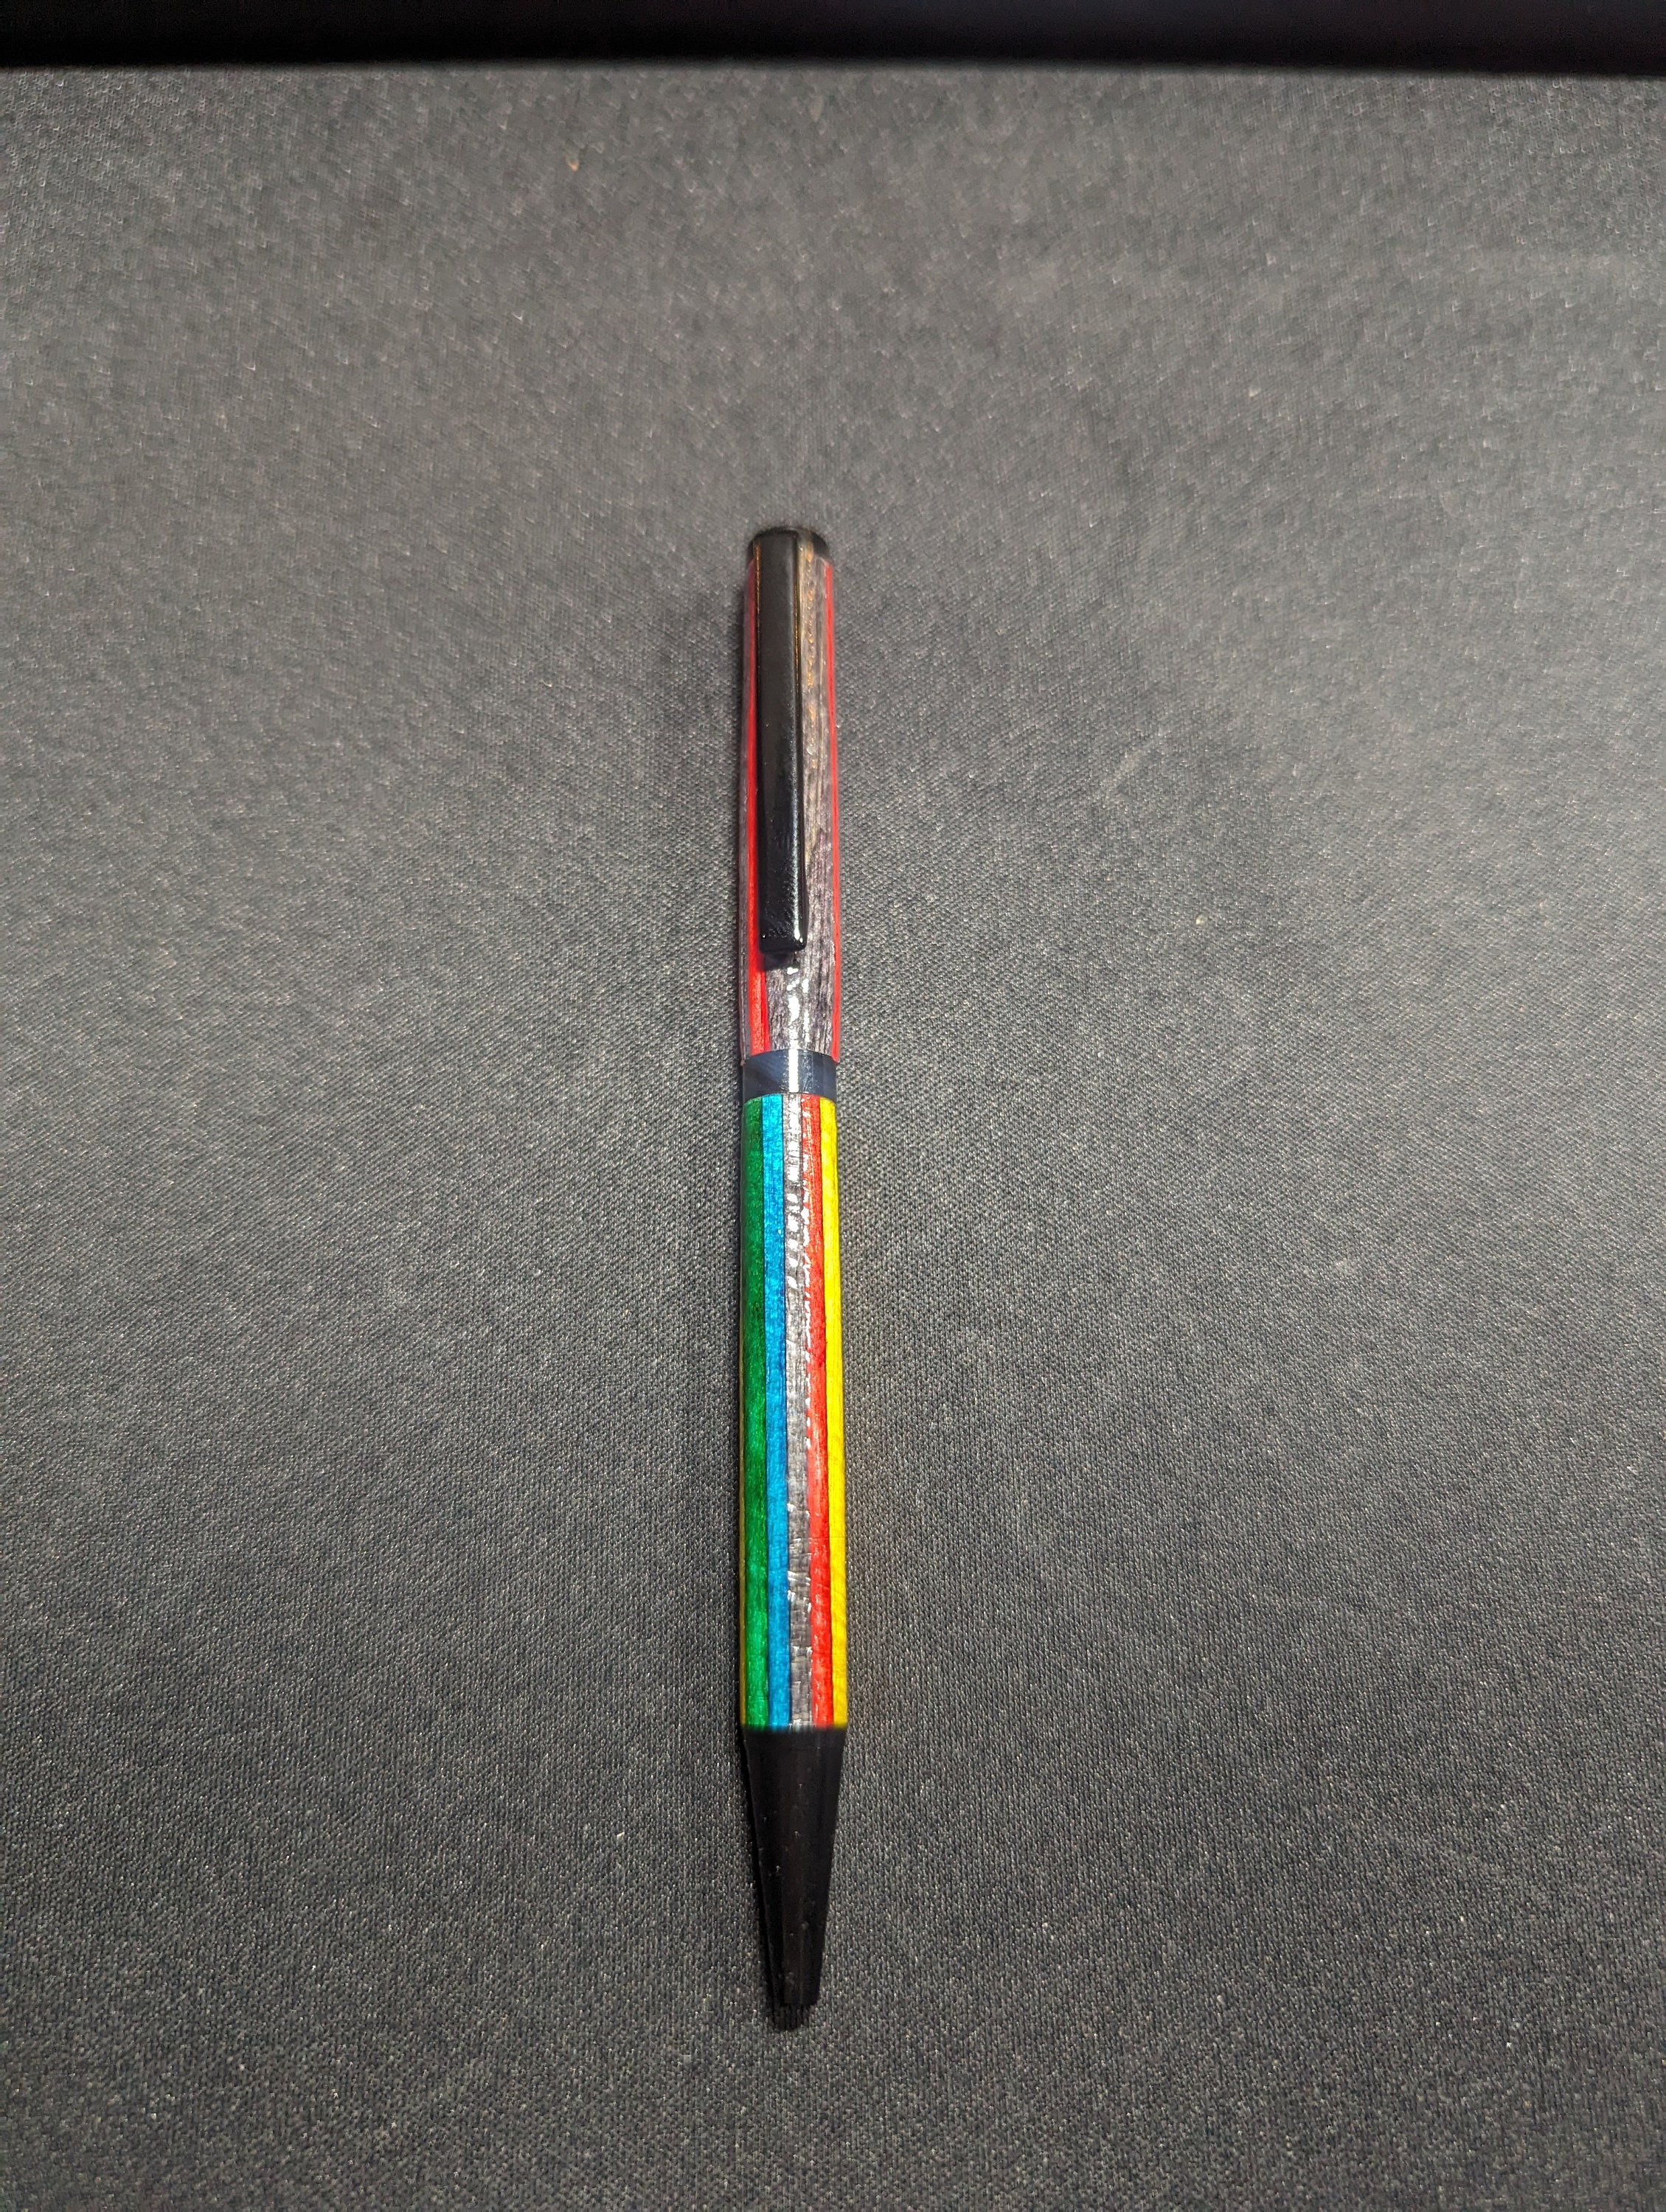 Patriot (Artisan) Ballpoint Pen Kit - Satin Nickel